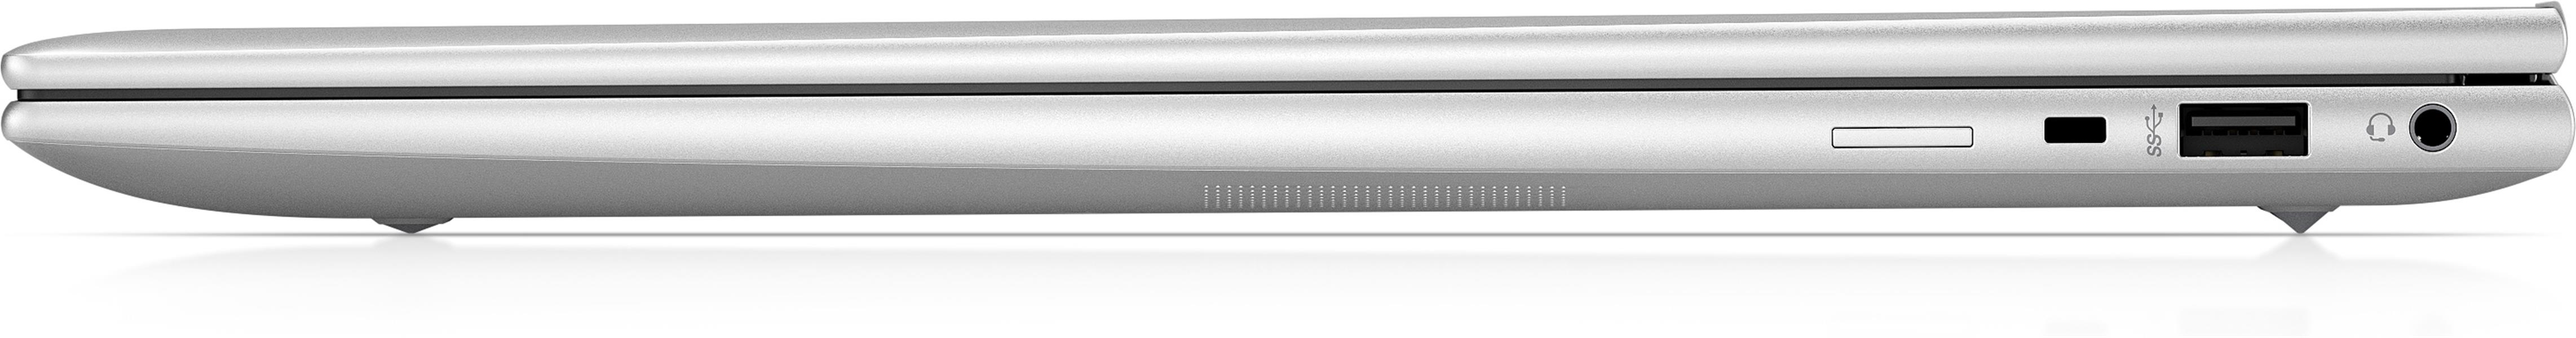 HP EliteBook 860 16 inch G9 Notebook PC